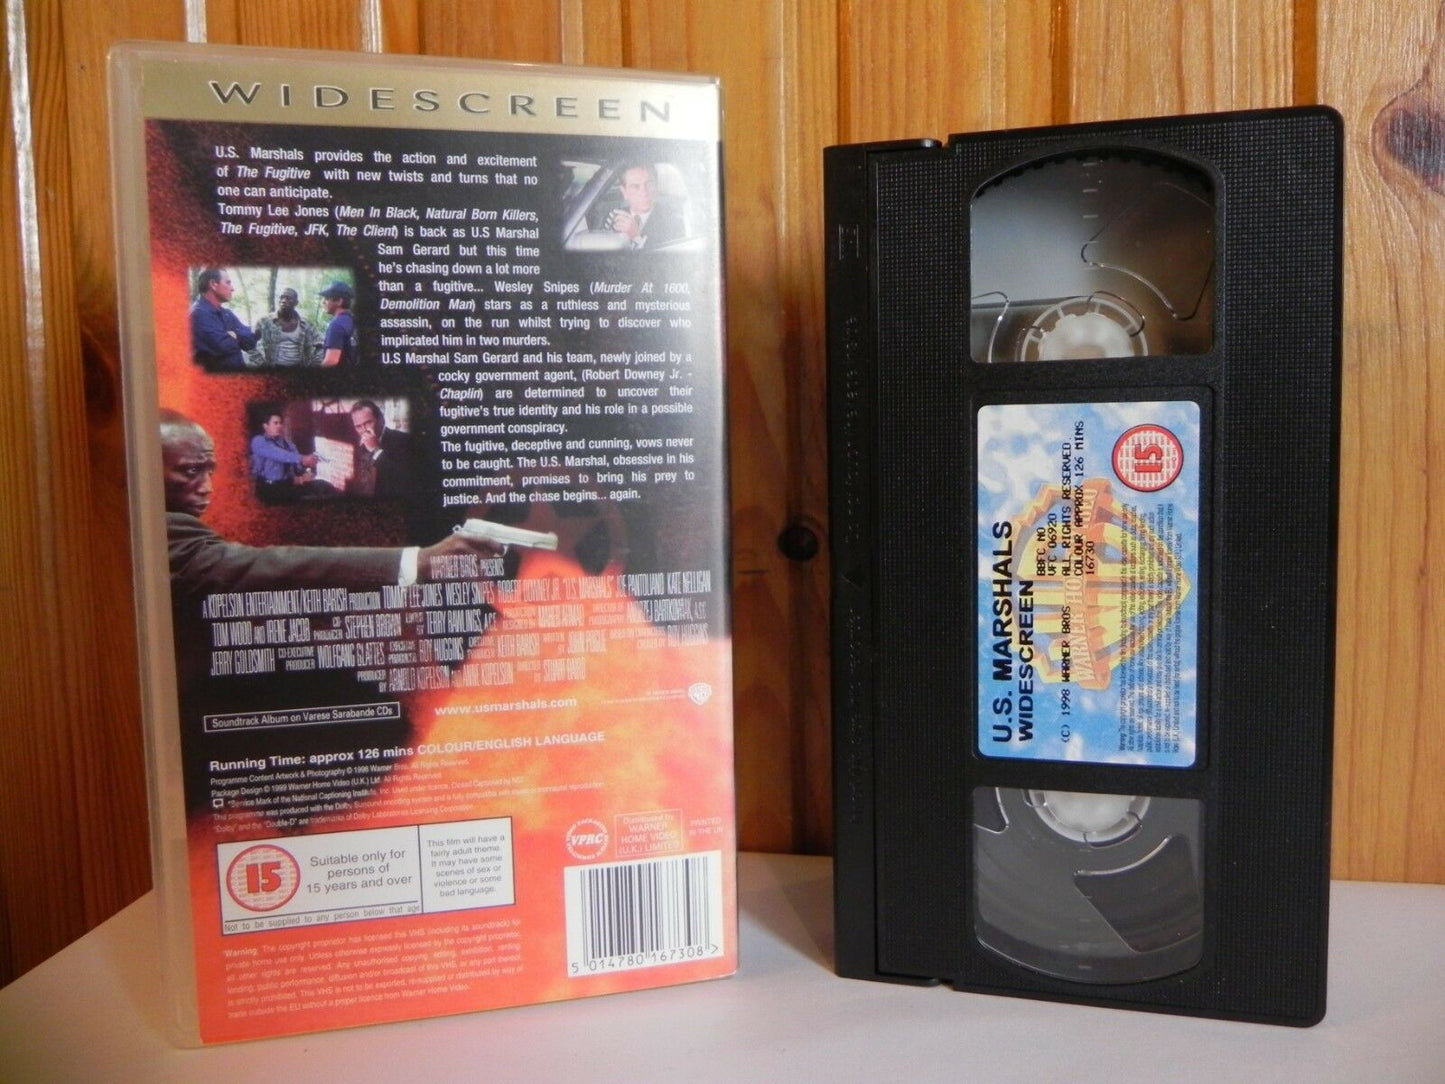 U.S.Marshals - Warner Home - Action - Widescreen - Tommy Lee Jones - Pal VHS-